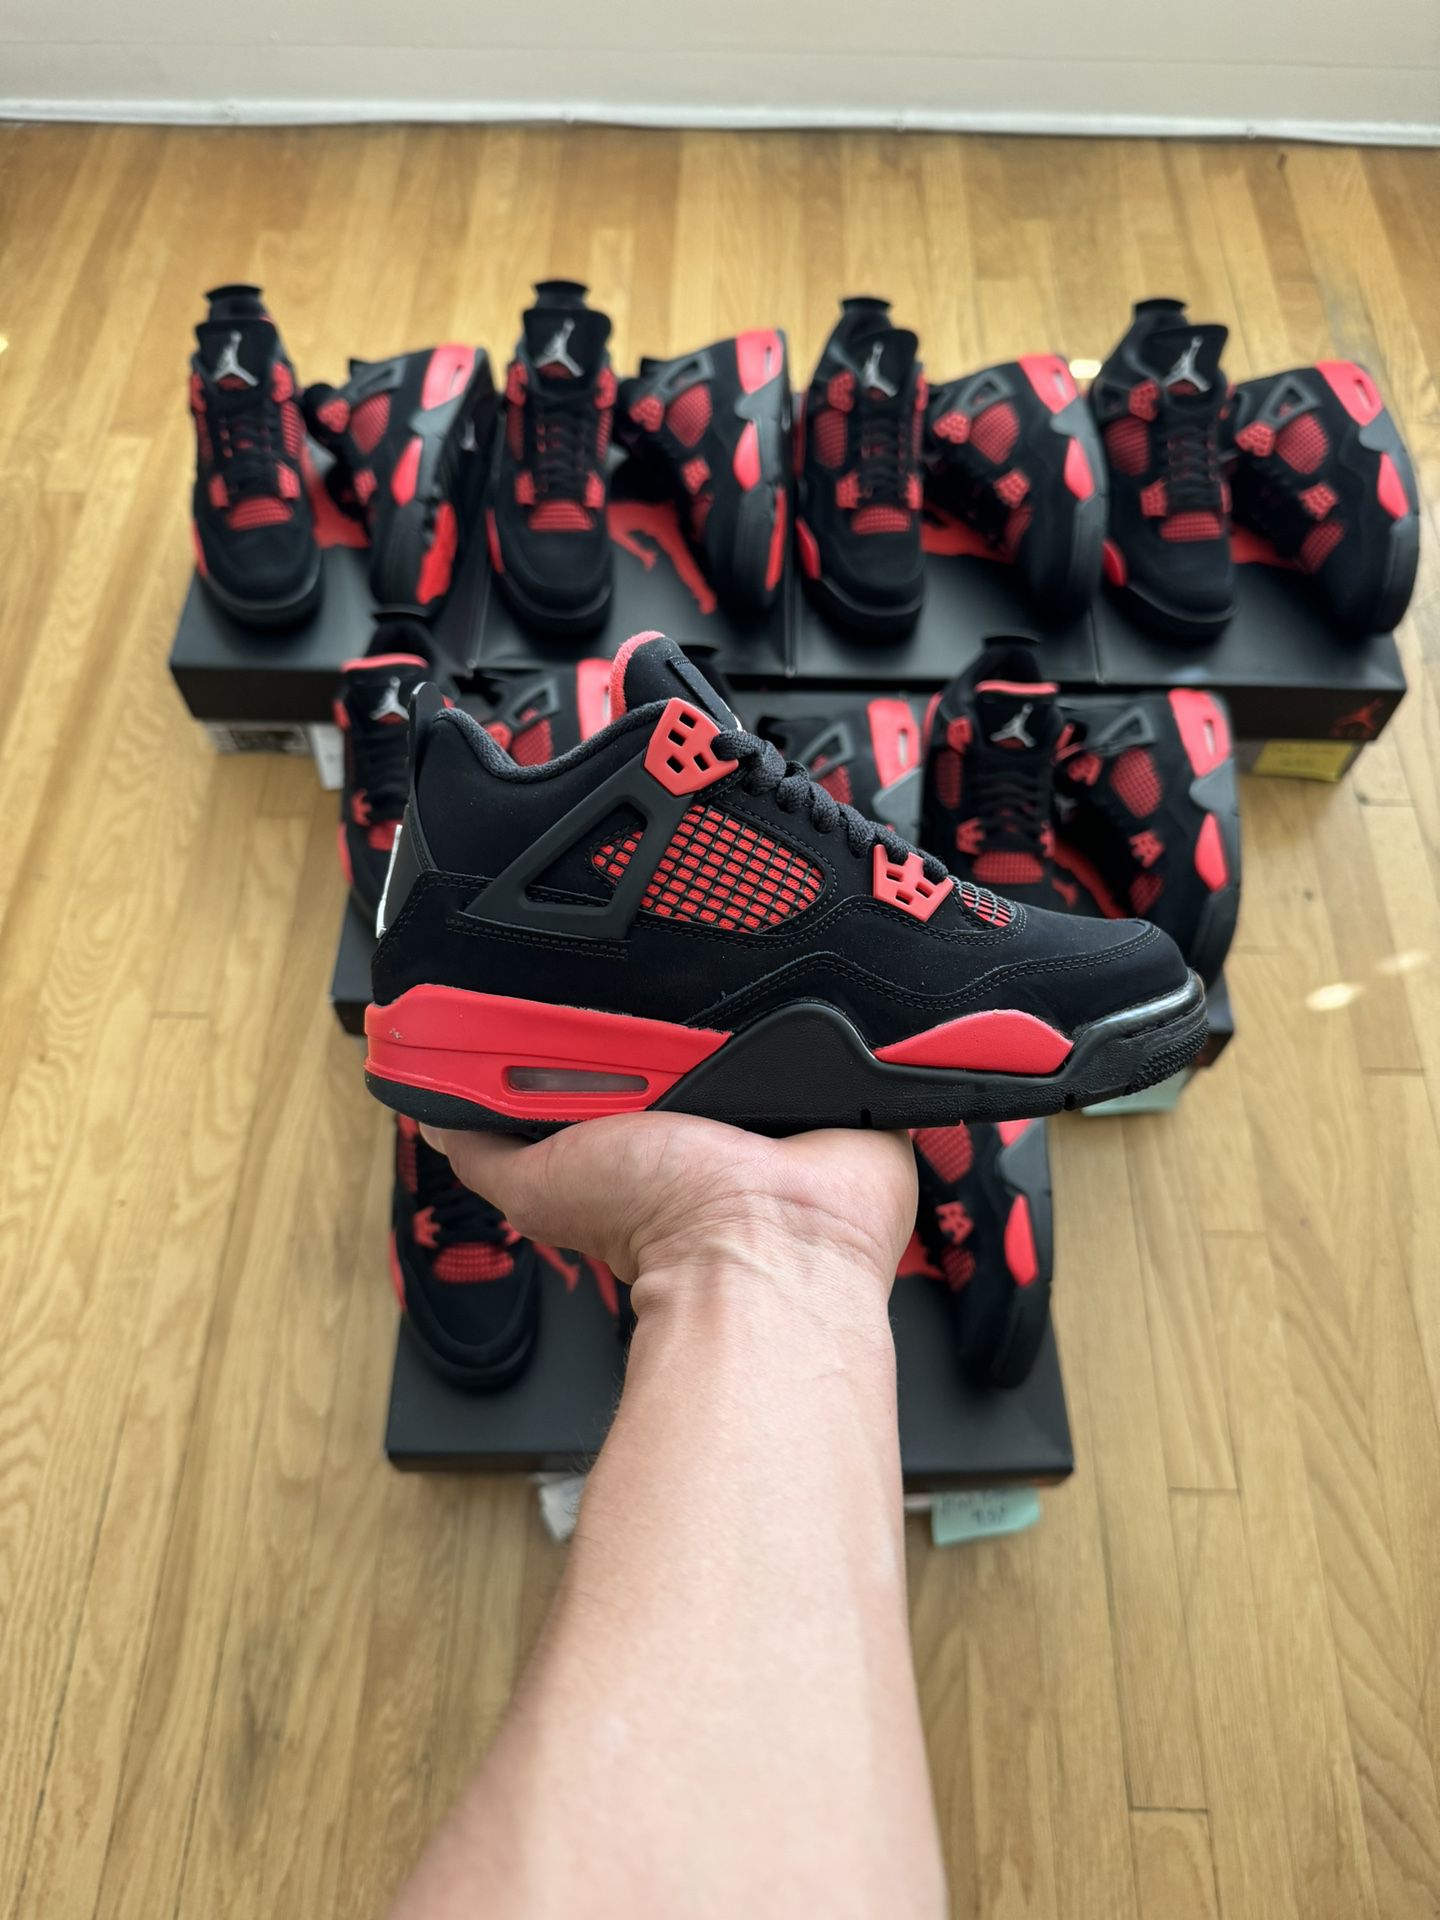 Jordan 4 Retro “Red Thunder” Size 12